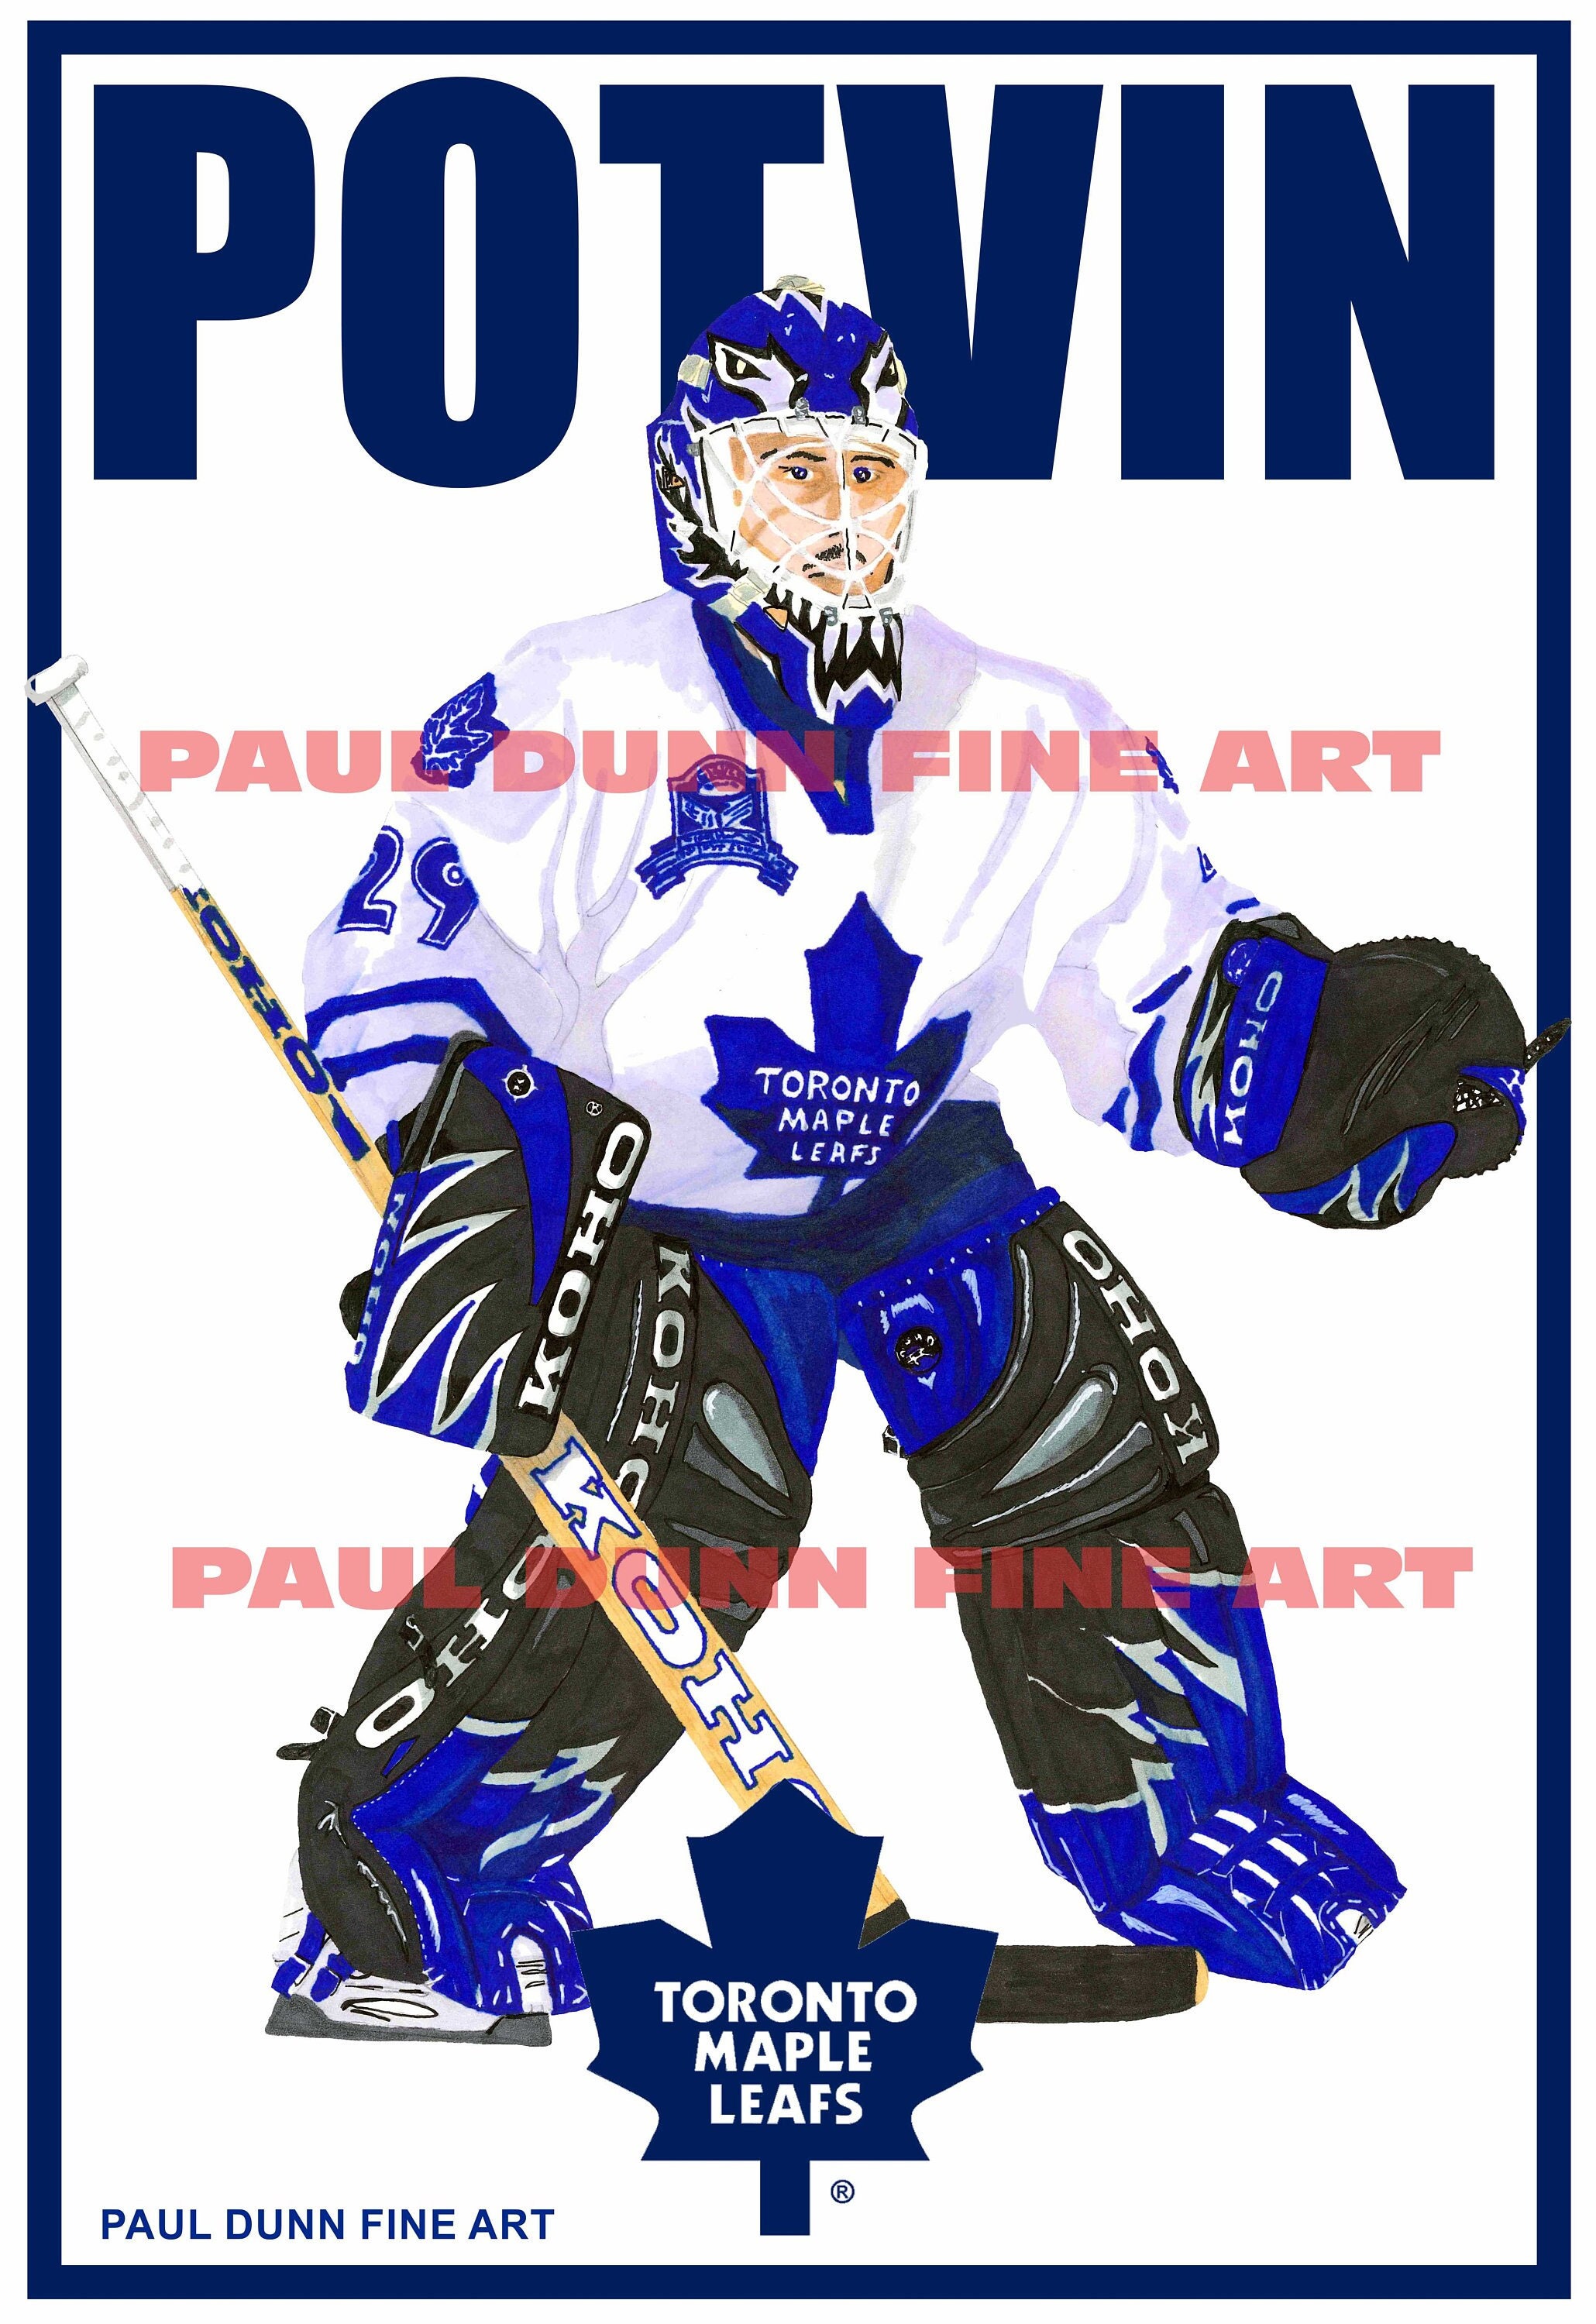 Custom Customized Maple Leafs Jerseys 91 John Tavares Hockey Jerseys -  China Toronto and Maple Leafs price